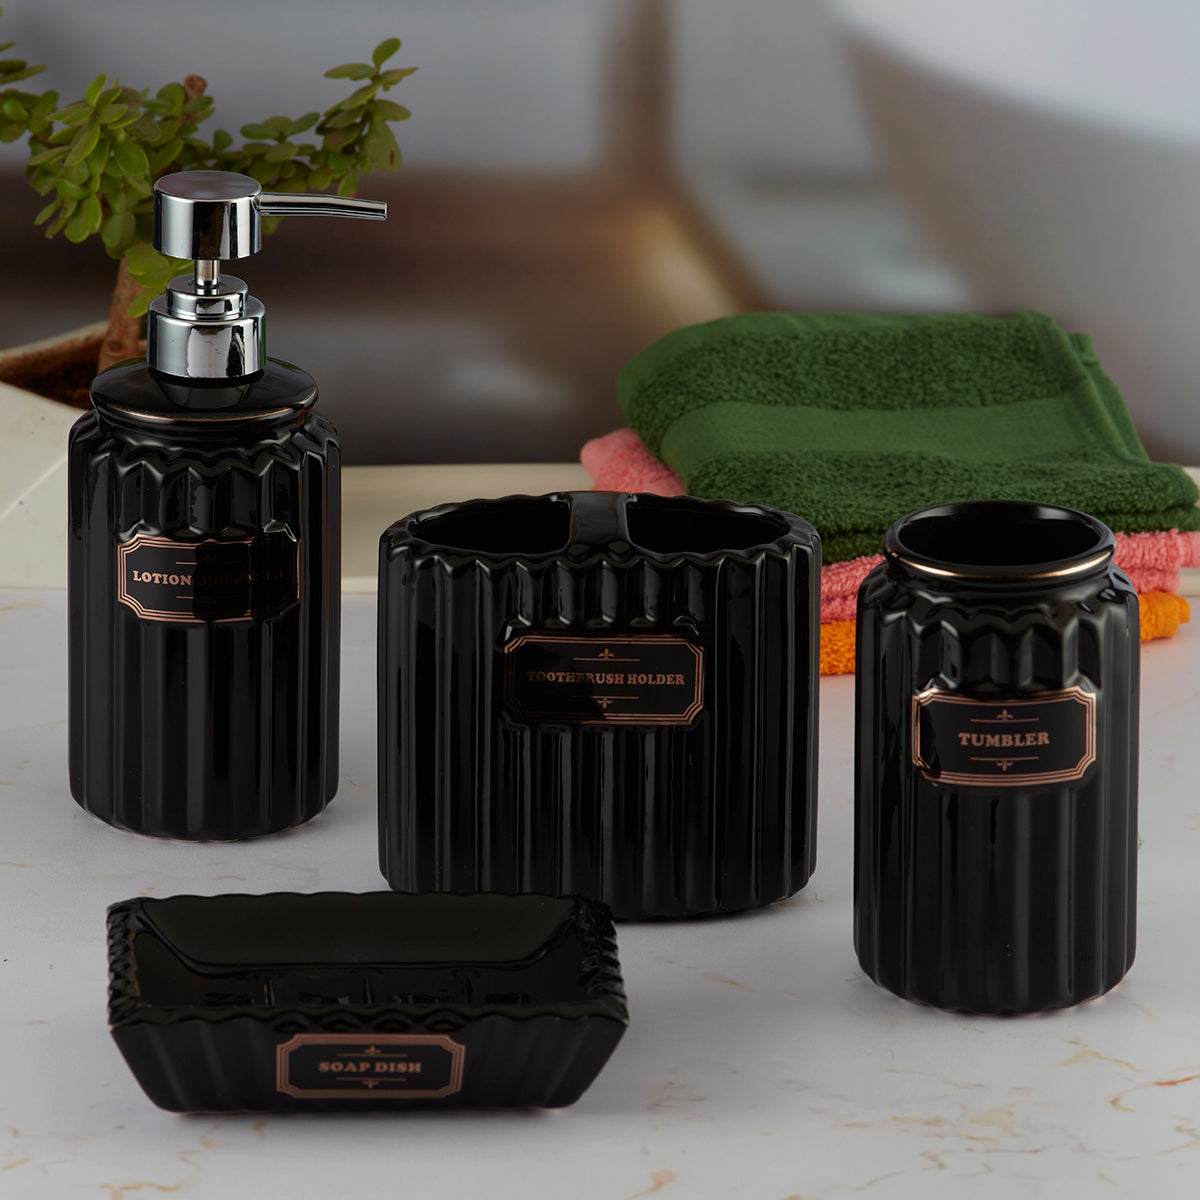 Ceramic Bathroom Accessories Set of 4 Bath Set with Soap Dispenser (8187)